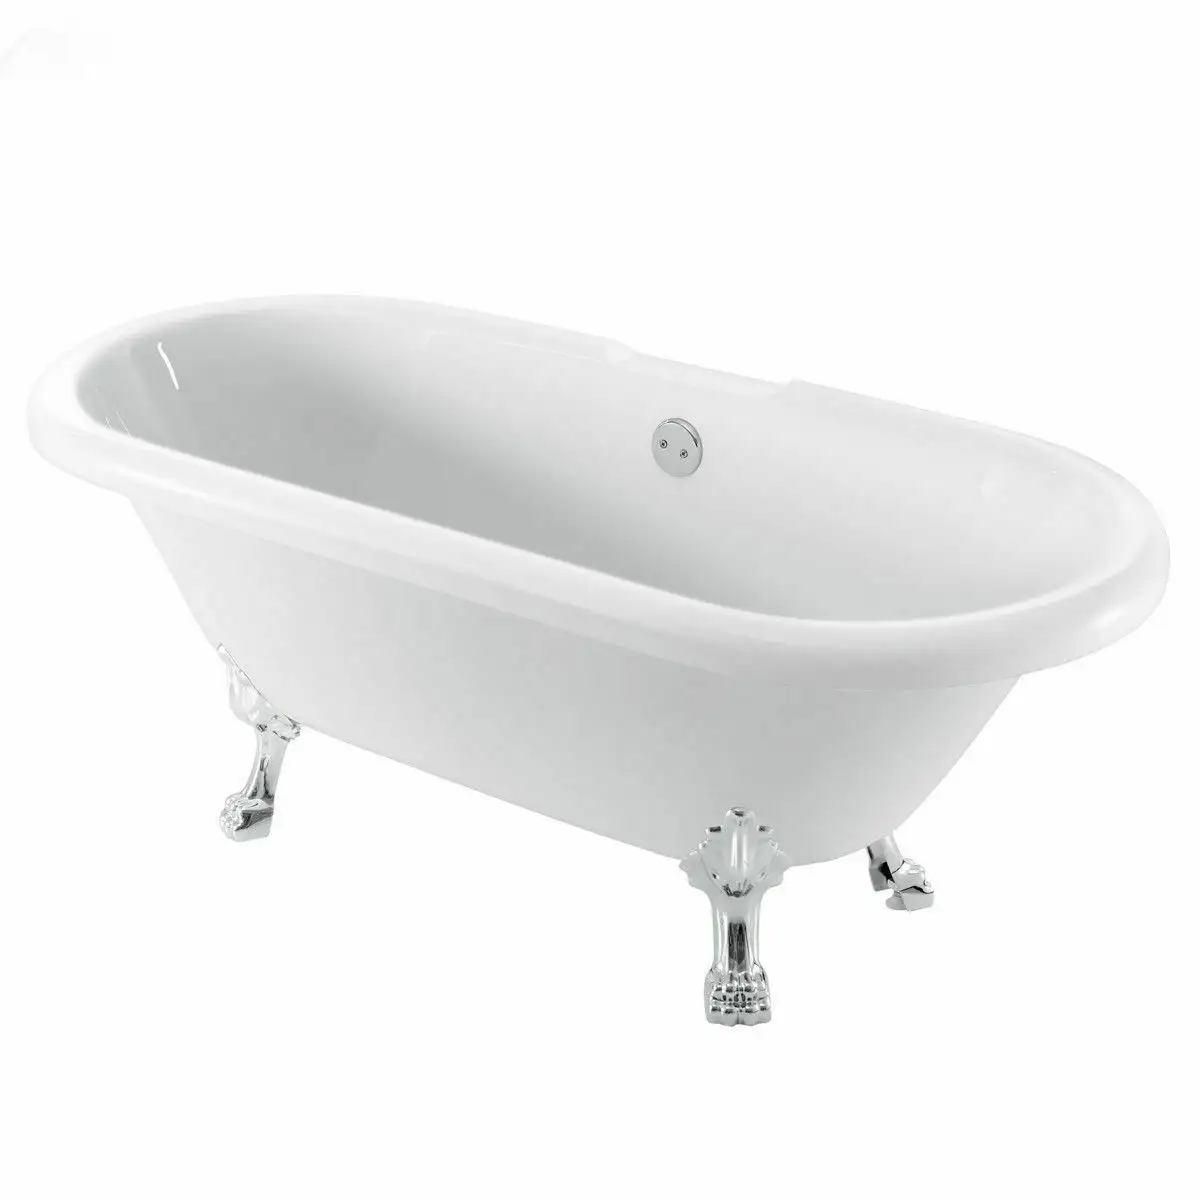 Modern Simple Design Acrylic Freestanding Bathtub Solid Surface Bath for AdultsWhirlpool,Ice,Freestanding Tubs